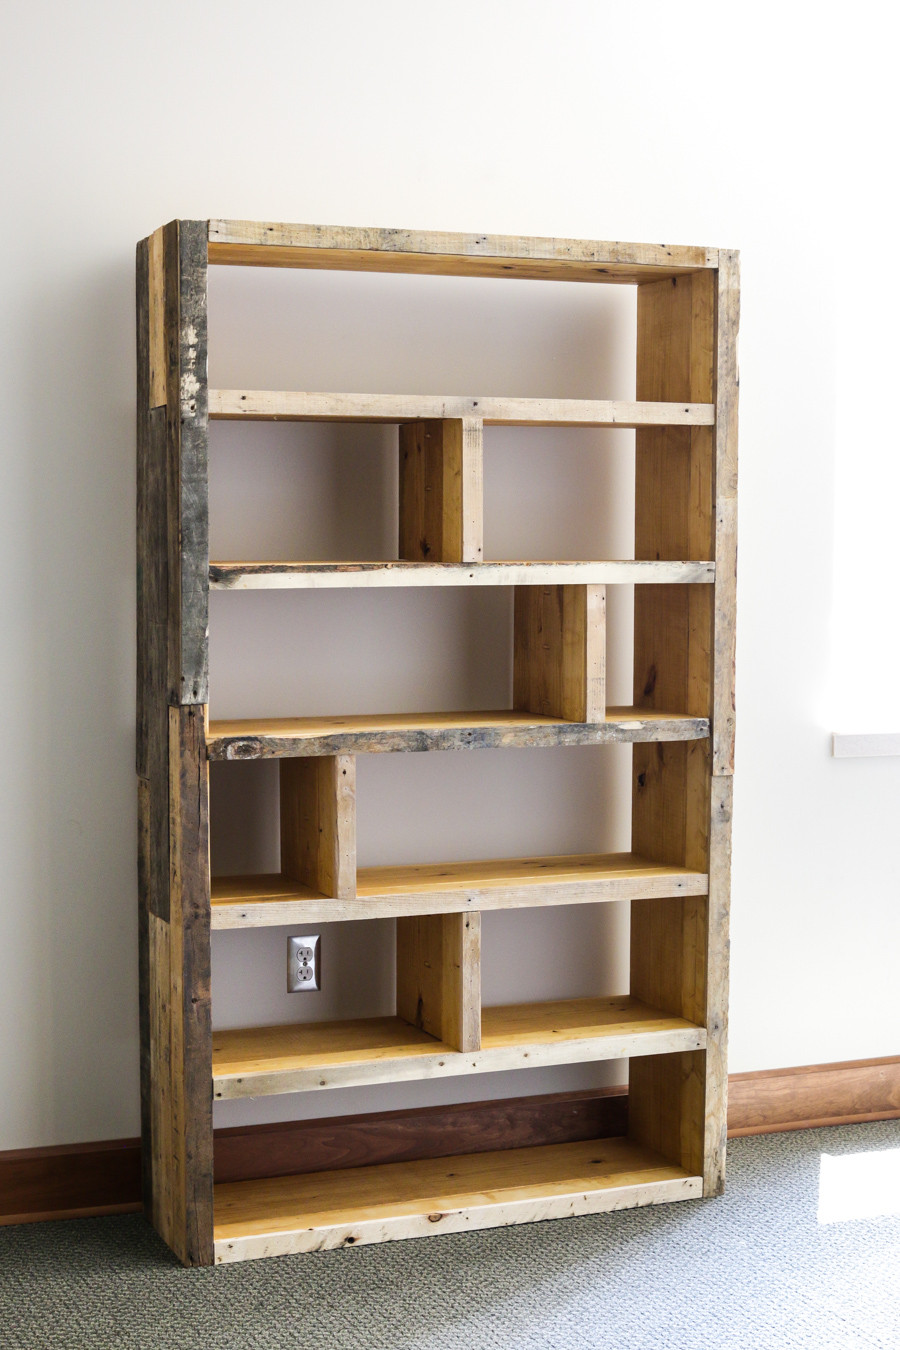 Best ideas about DIY Wooden Bookshelf
. Save or Pin DIY Rustic Pallet Bookshelf Now.